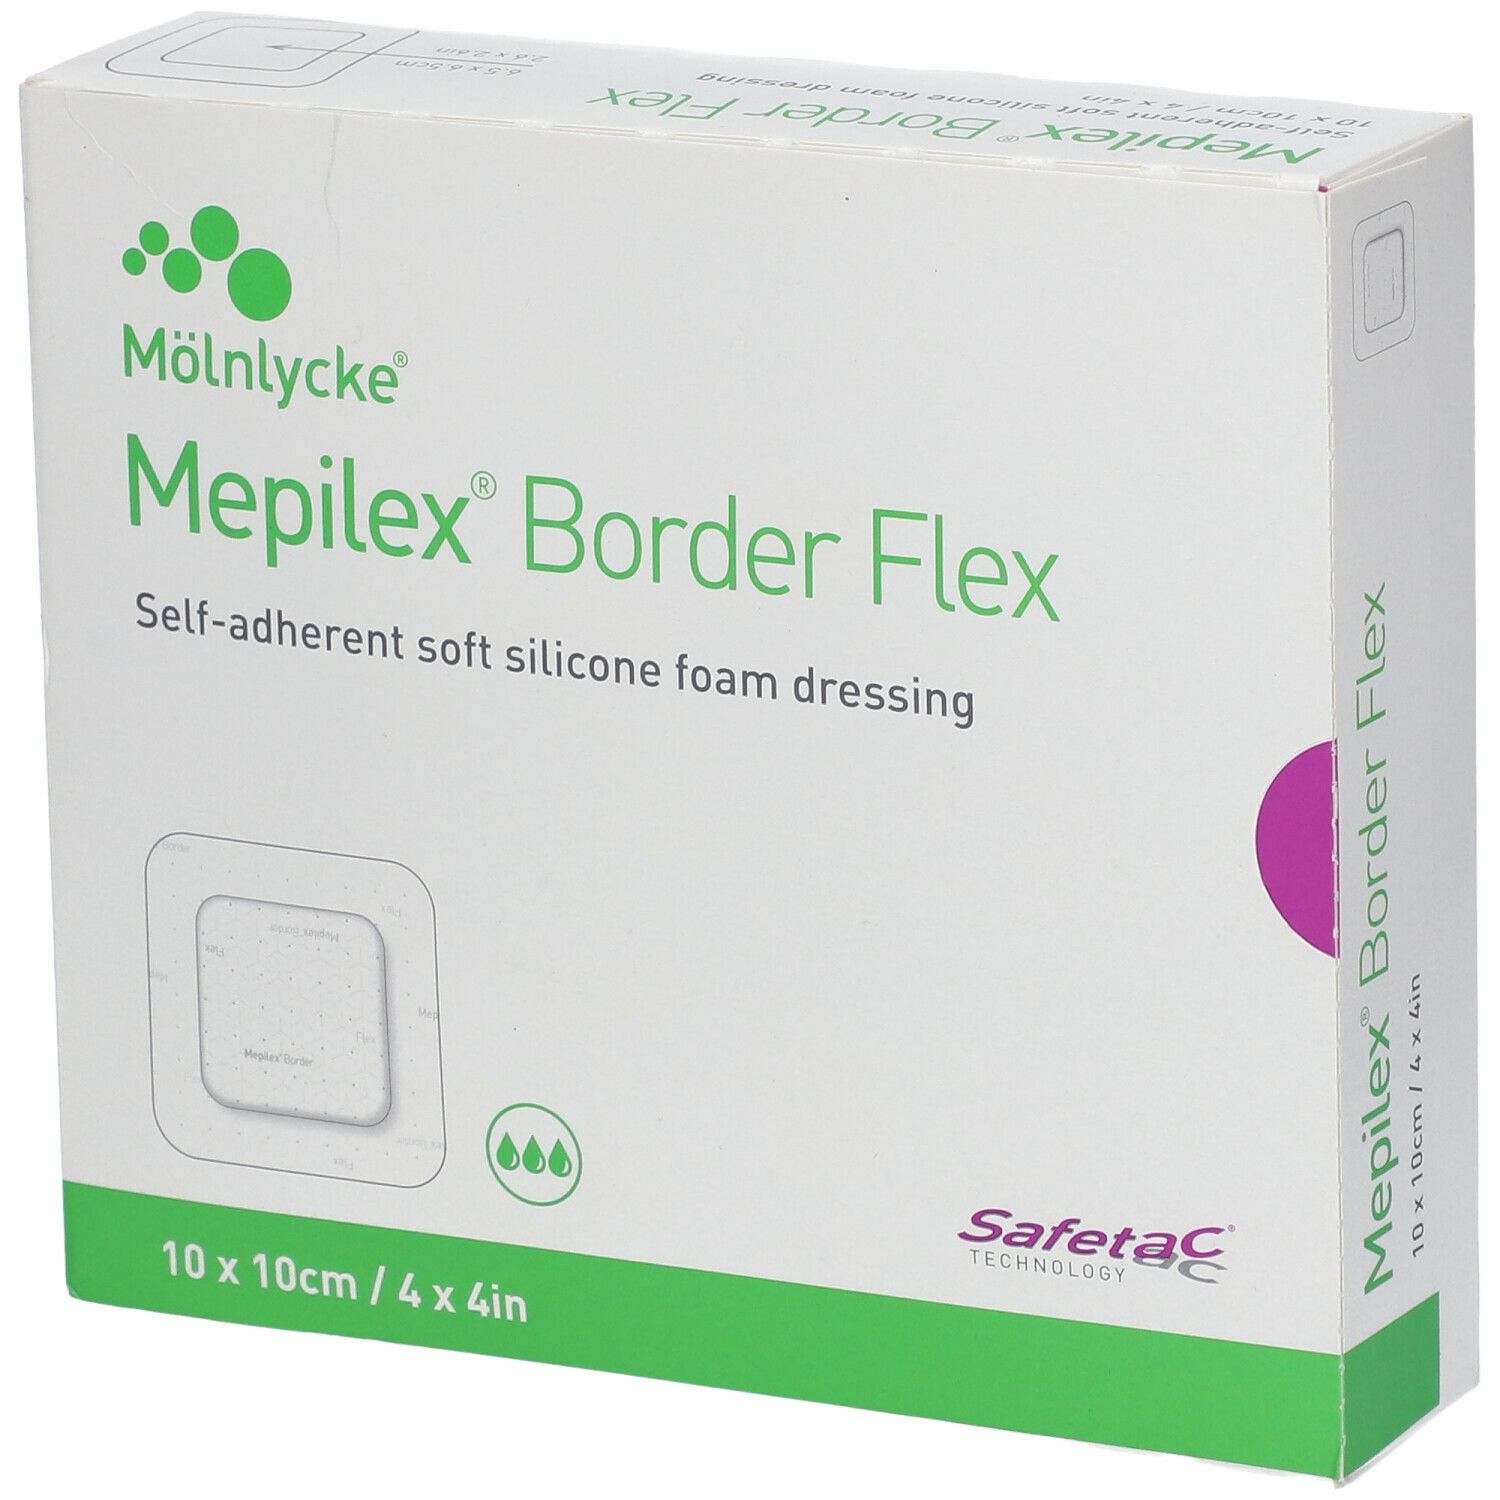 Mepilex® Border Flex 10 x 10 cm